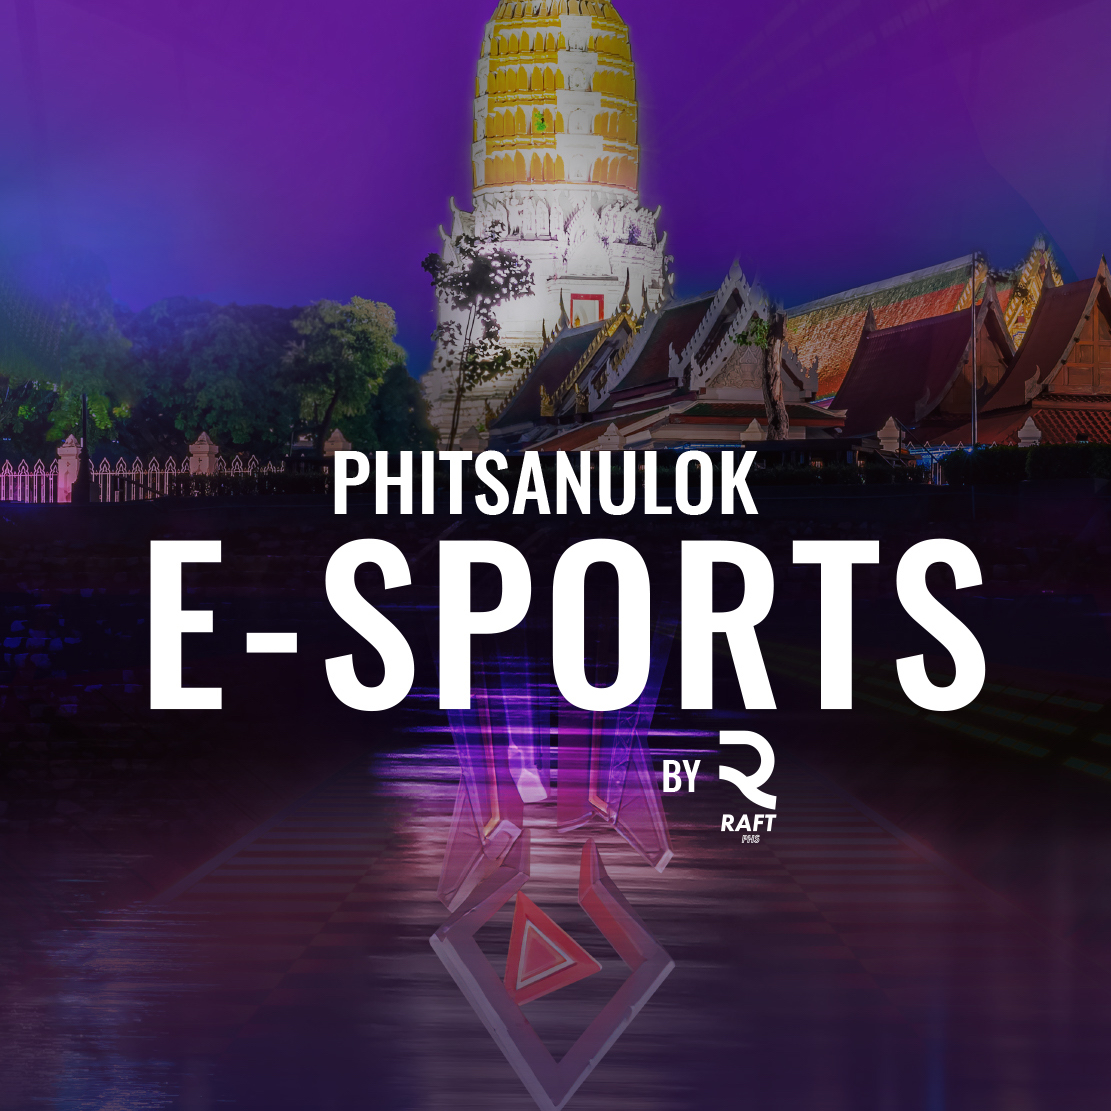 Phitsanulok E-sport by RAFT